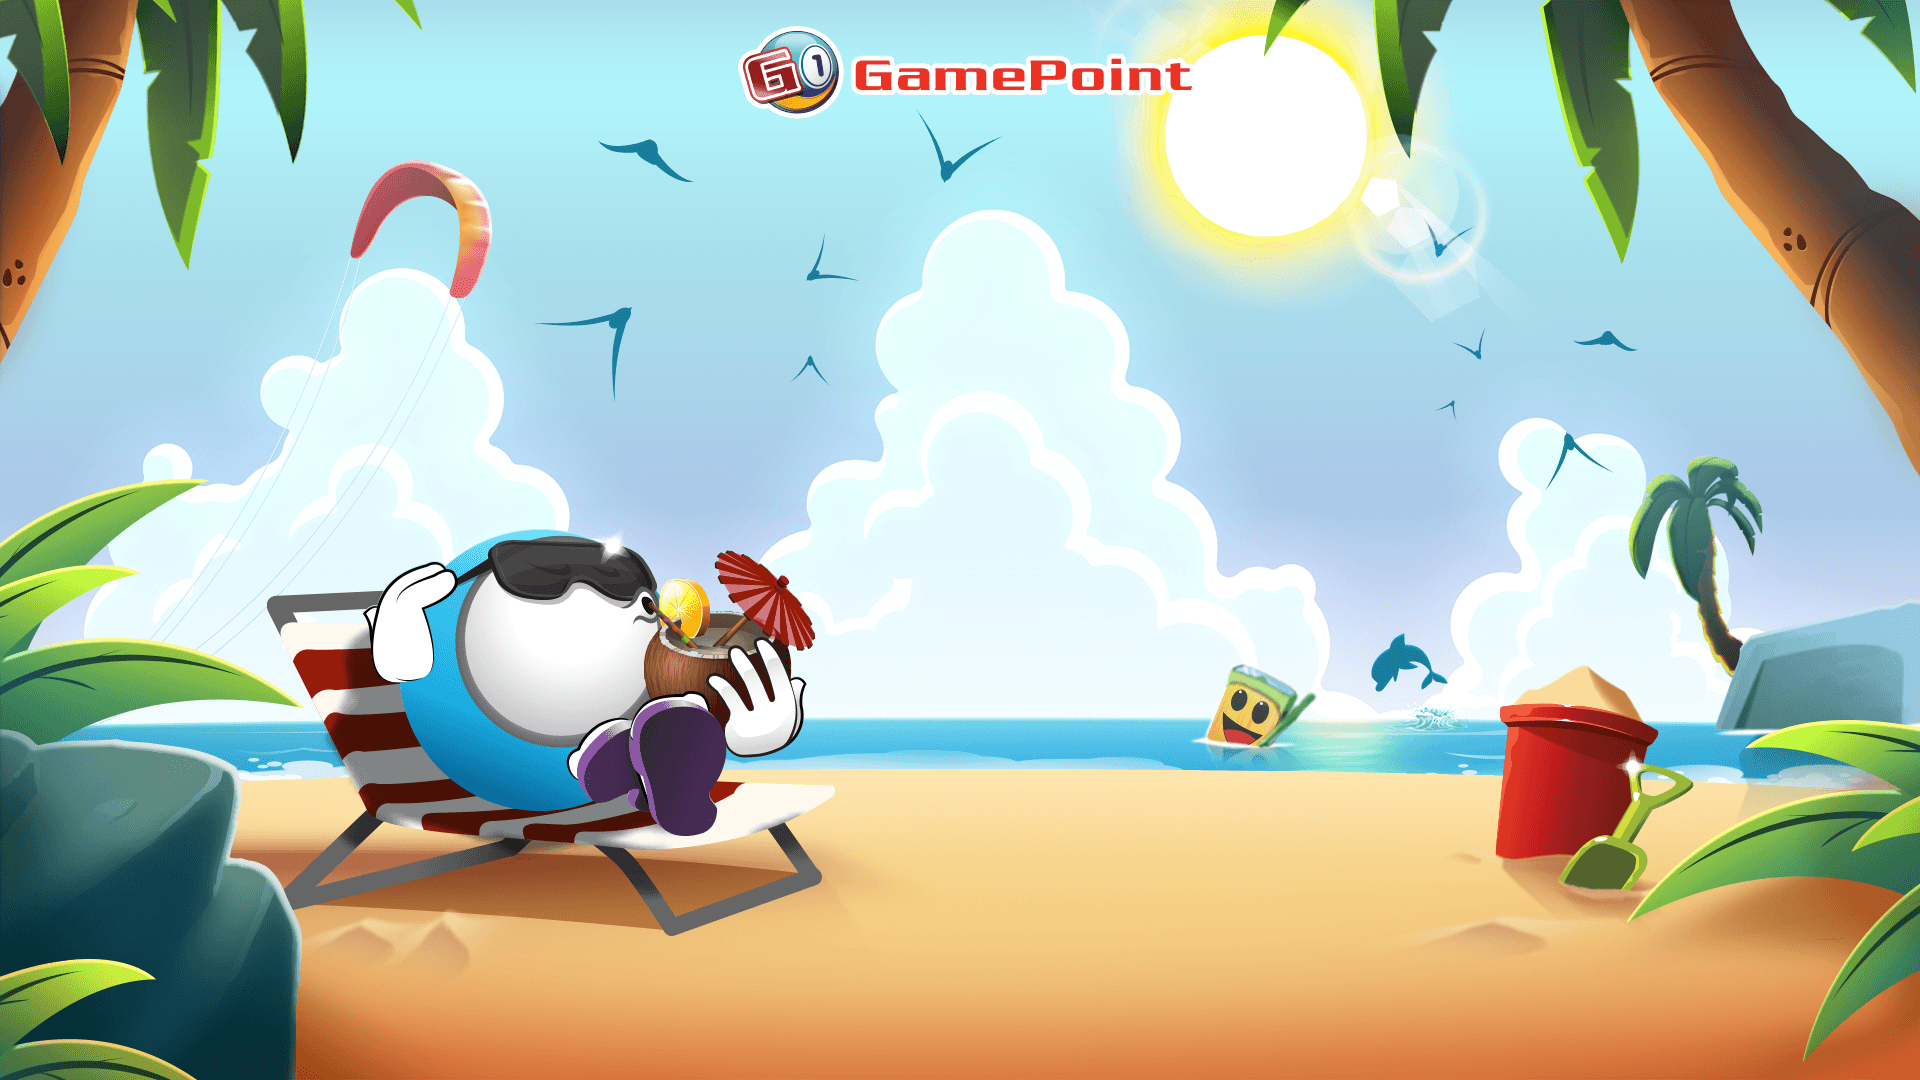 Enjoy Summer in GamePoint style!